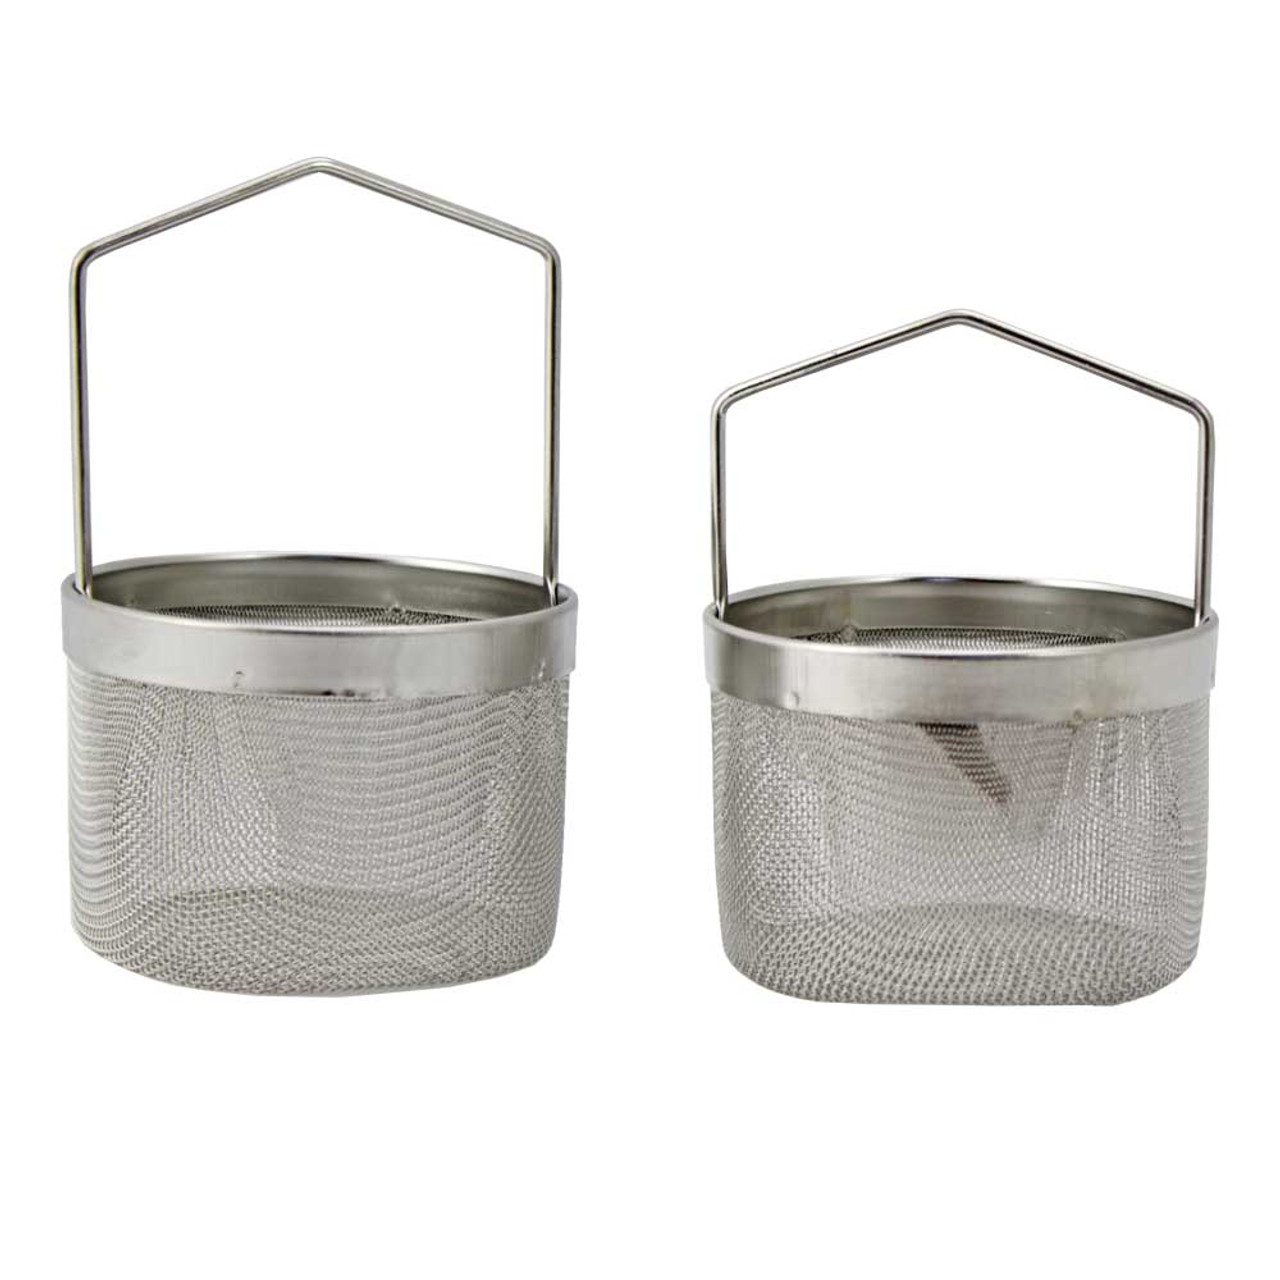 5 x 4 x 1.75 Stainless Steel Fine Mesh Ultrasonic Cleaner Basket Jewelry